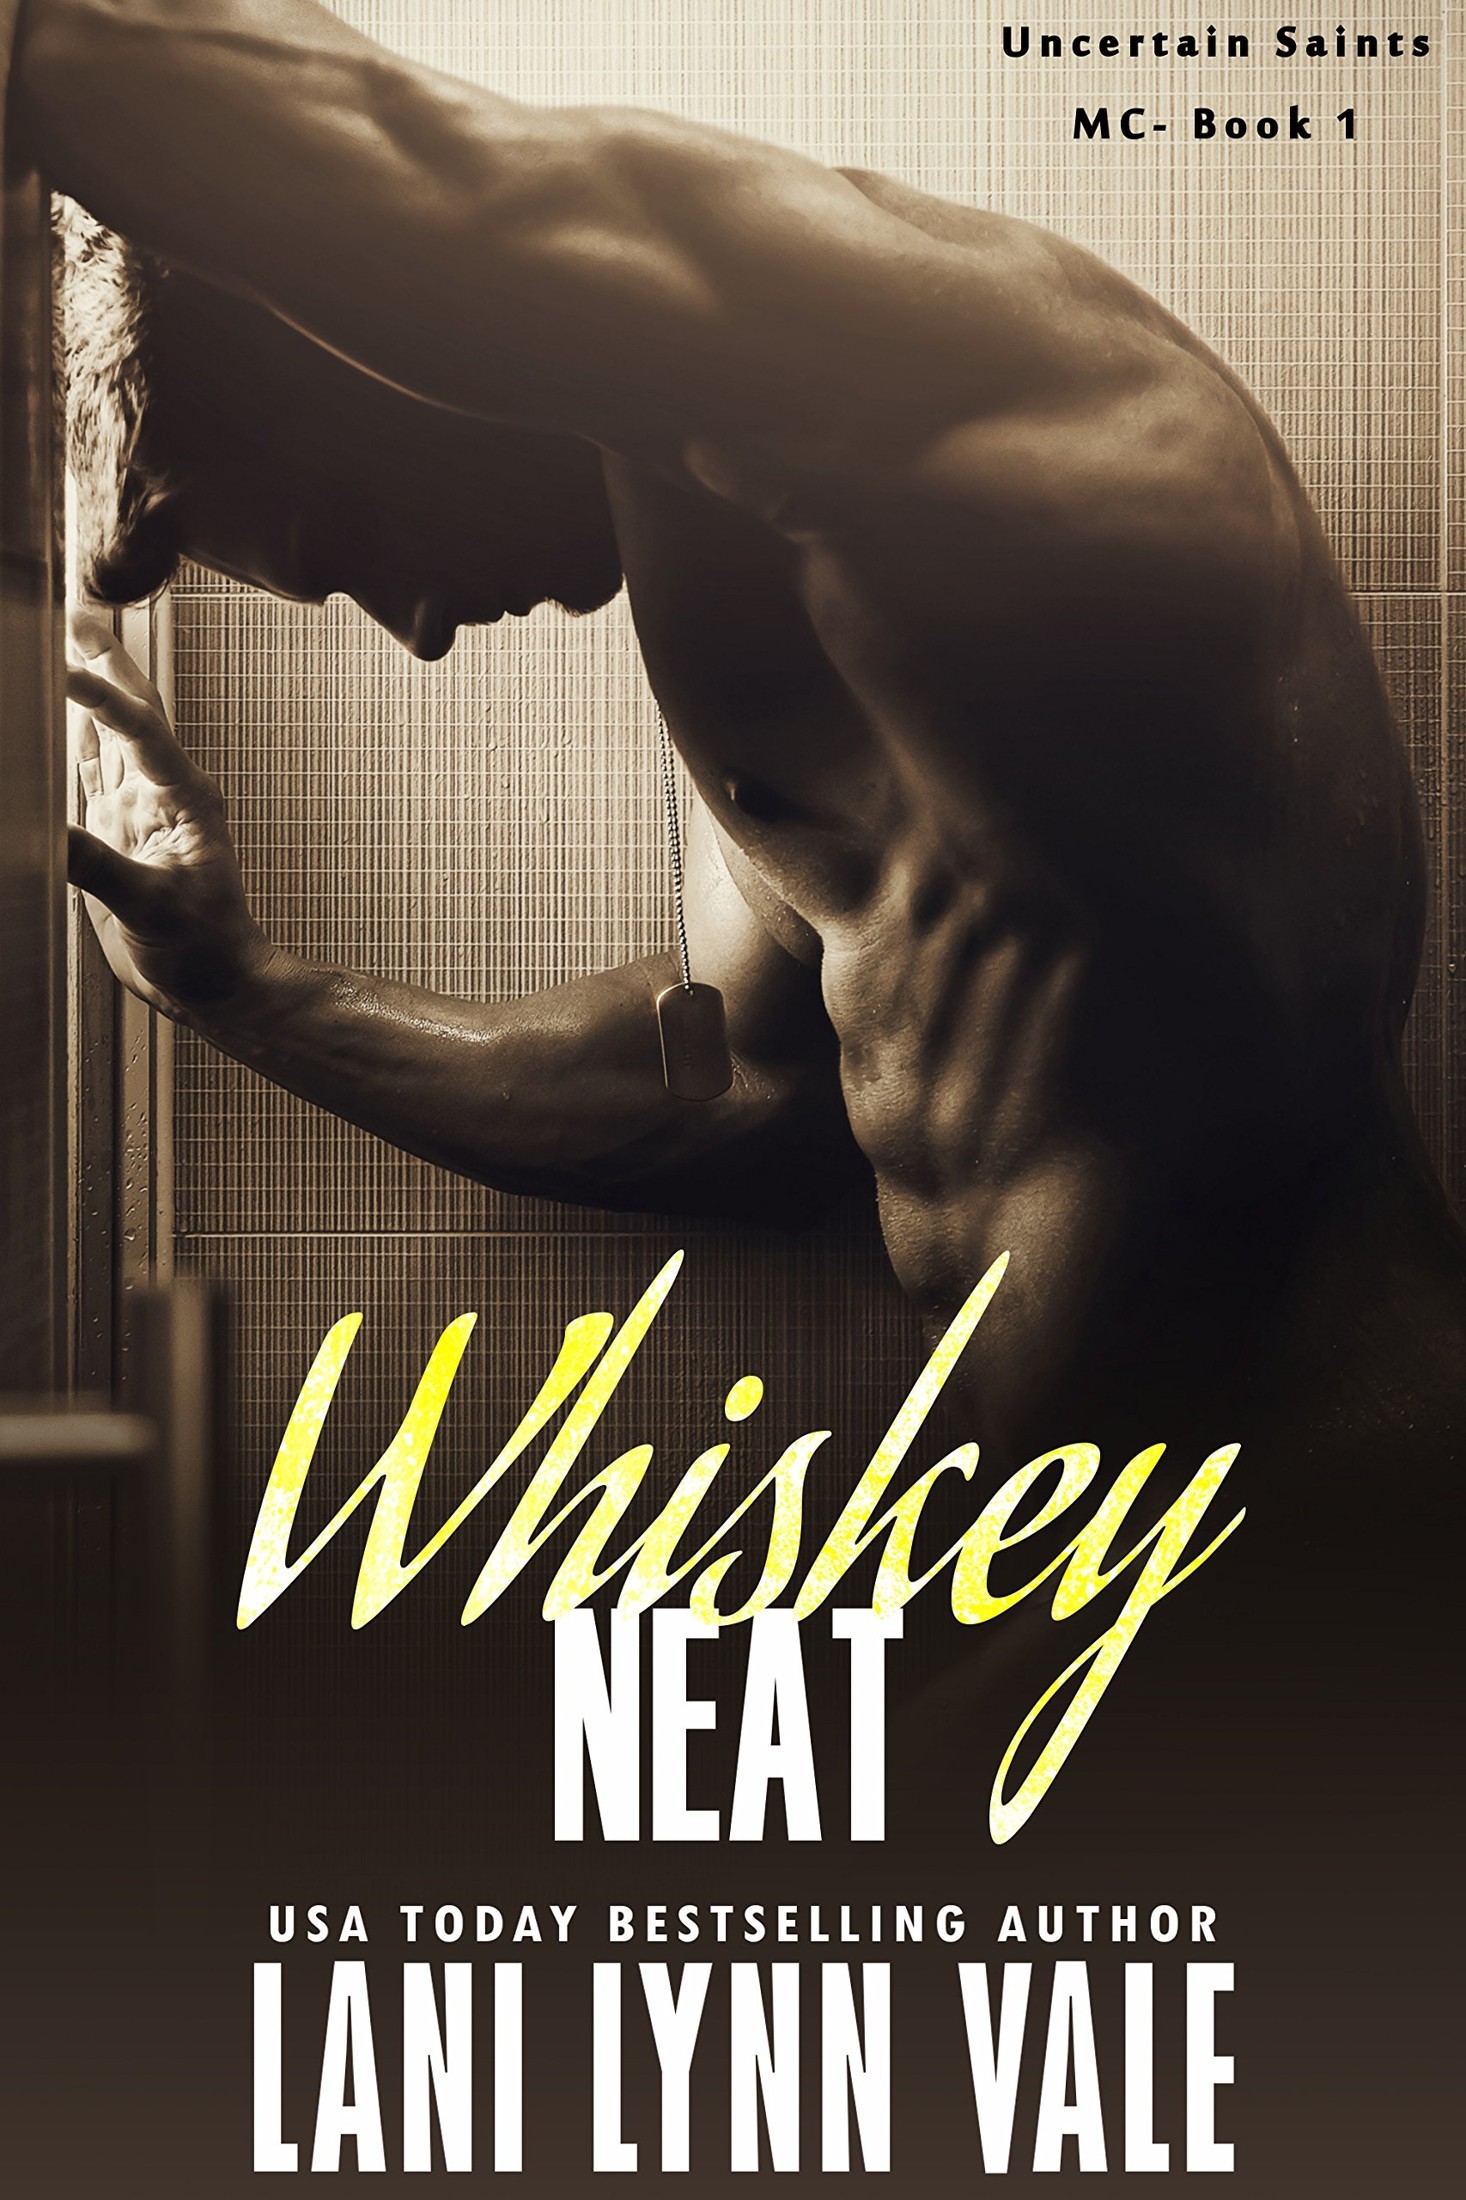 Whiskey Neat (The Uncertain Saints MC Book 1) by Lani Lynn Vale